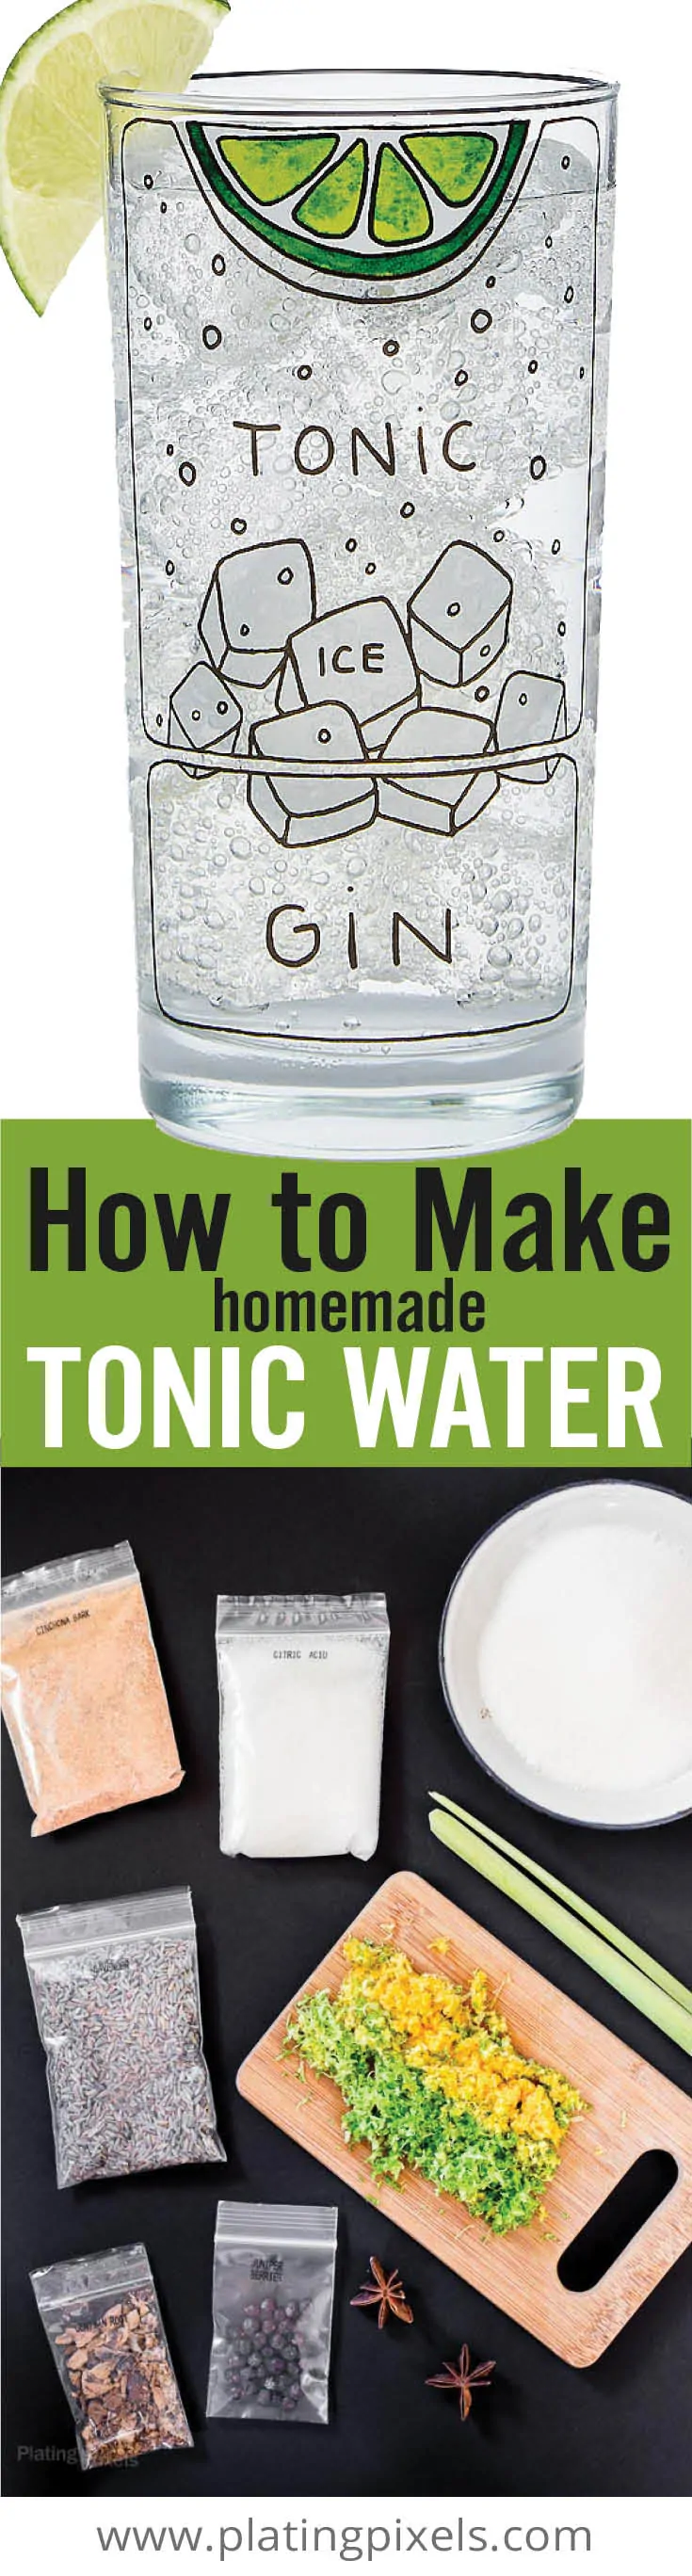 How to Make Tonic Water (Homemade Tonic Water)